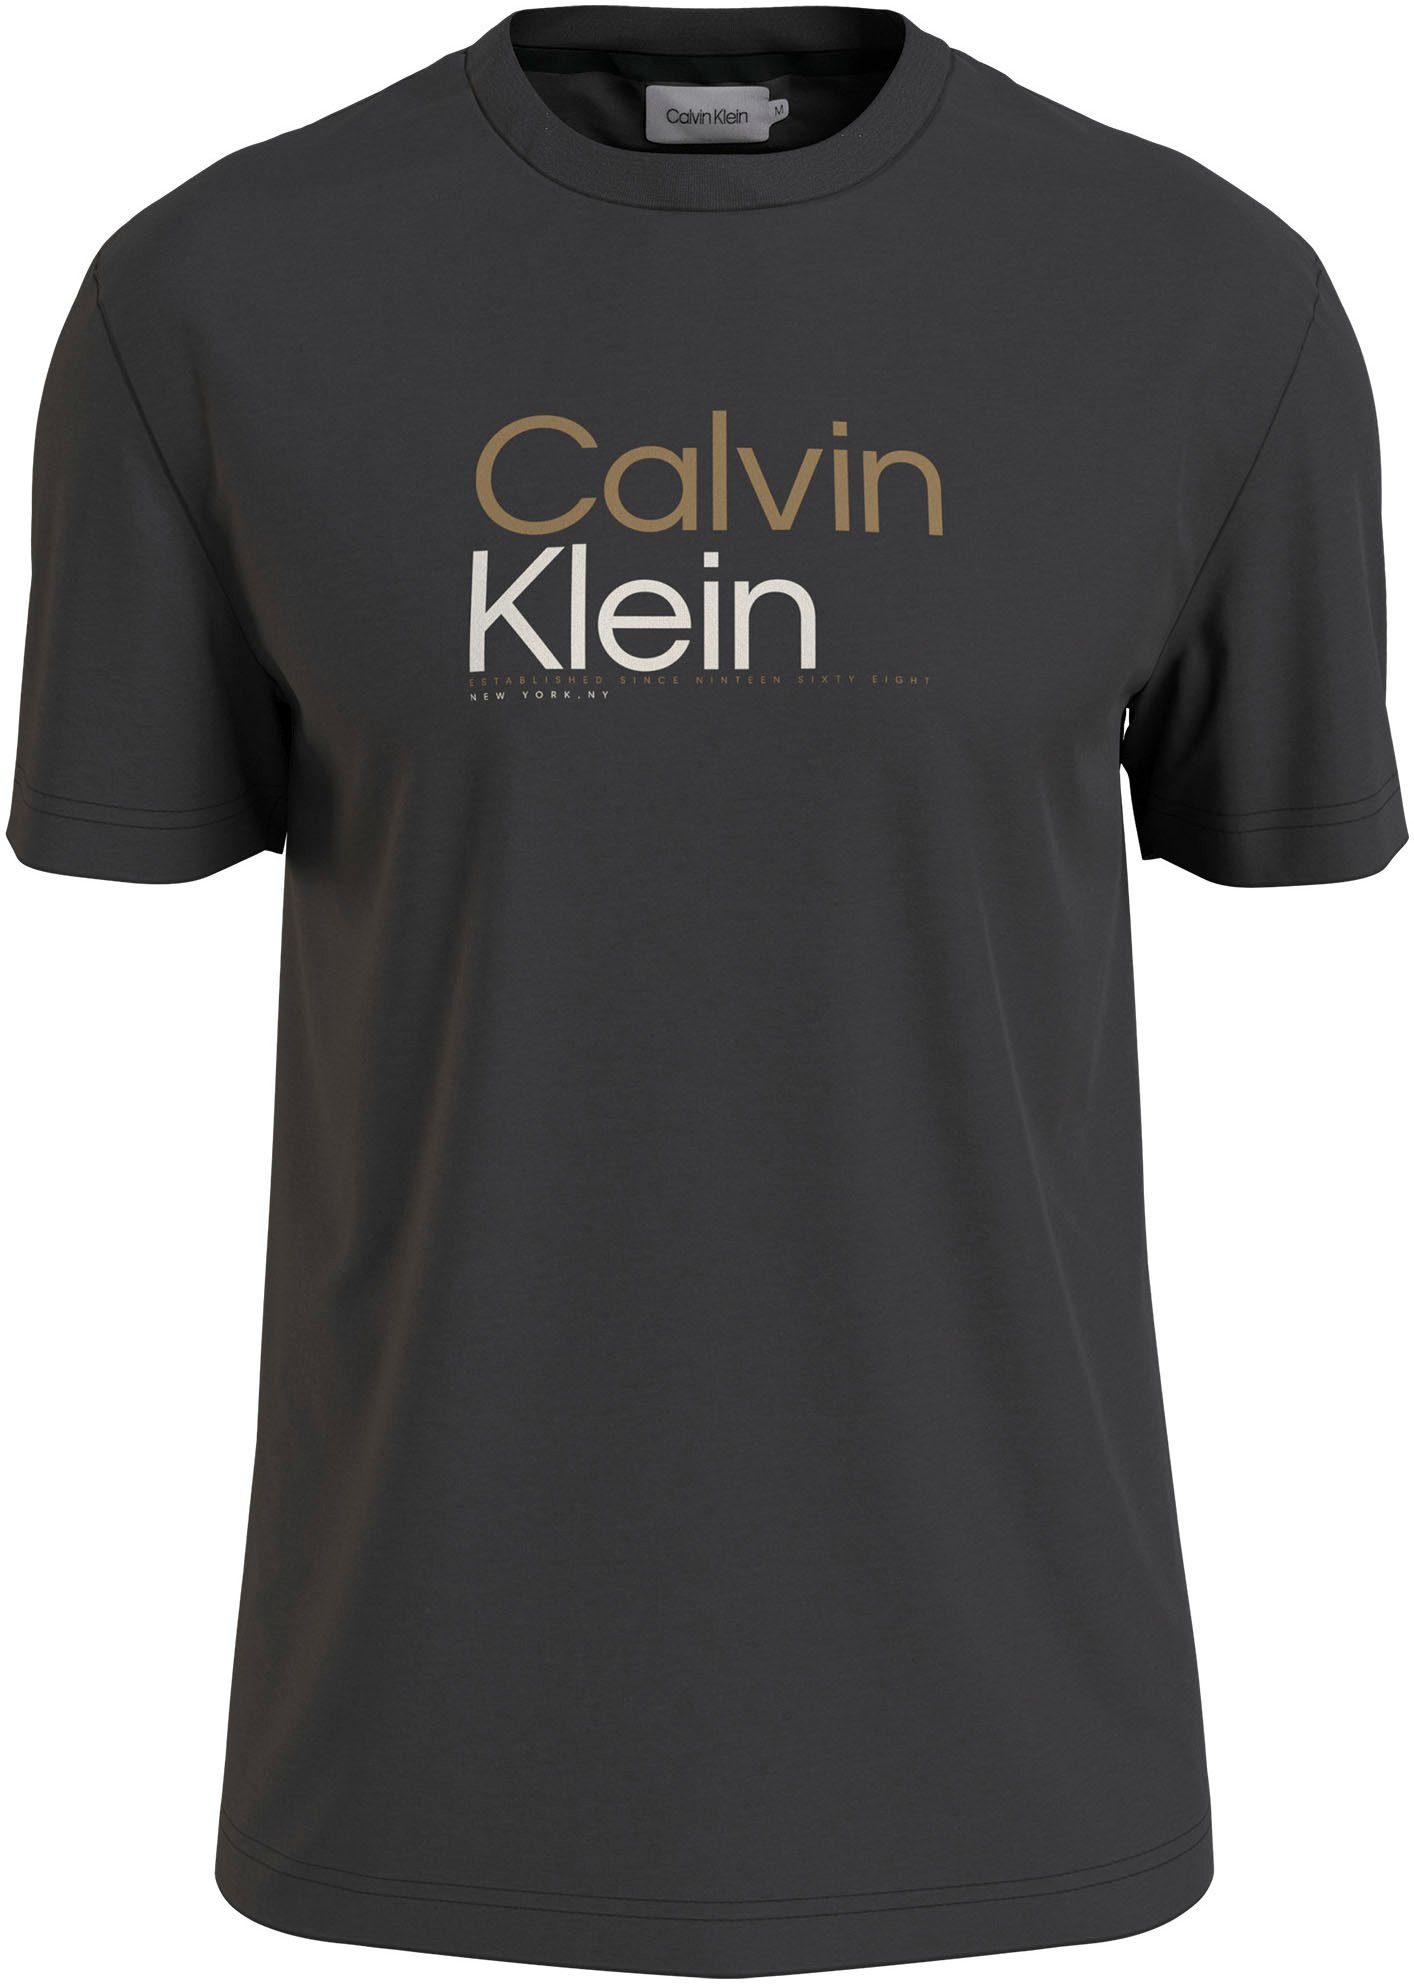 MULTI LOGO Ck Klein T-Shirt Calvin Markenlabel T-SHIRT Black mit COLOR